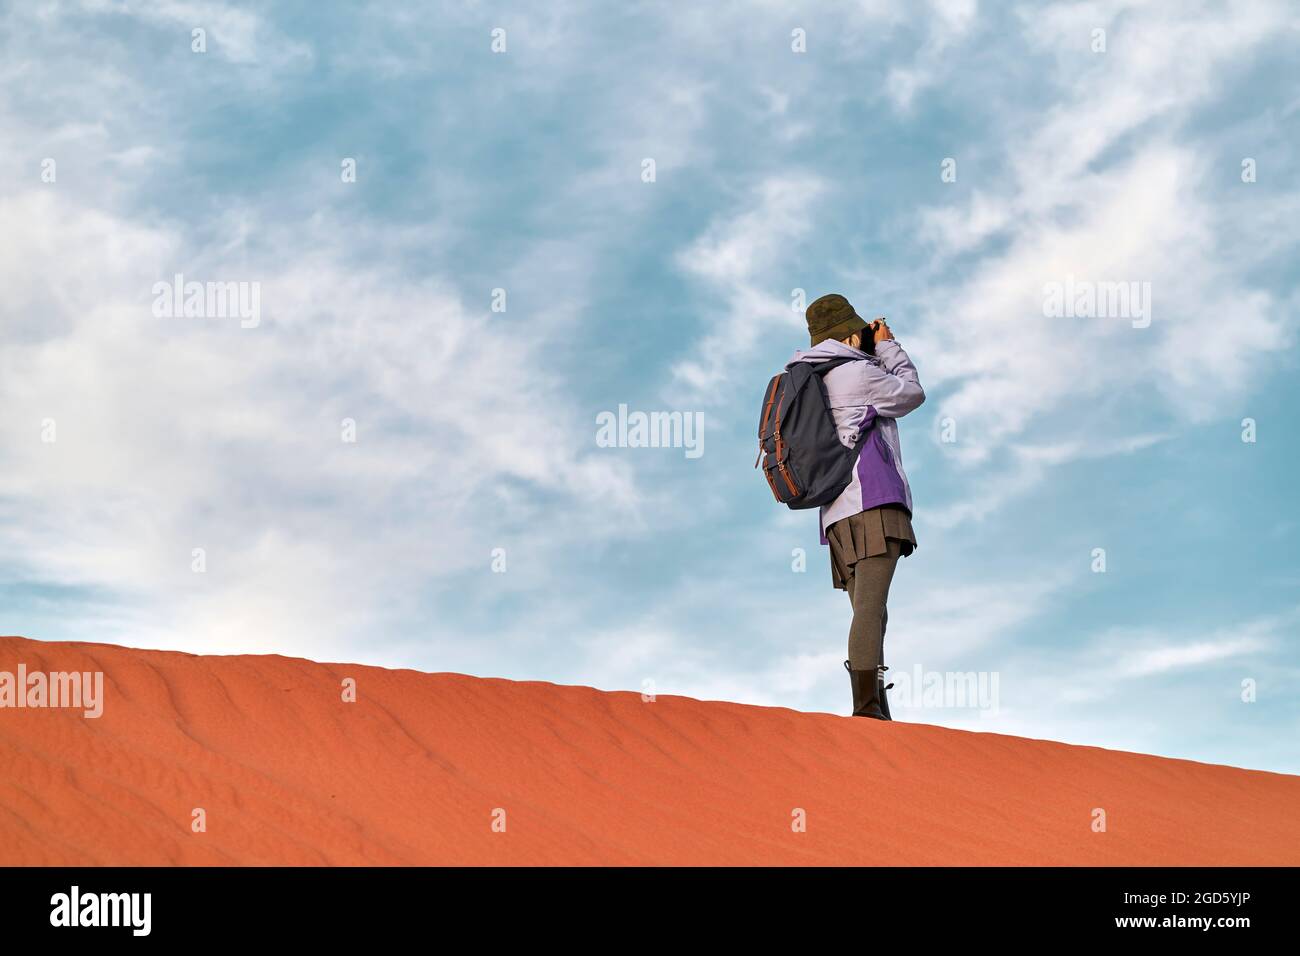 fotografa asiatica in piedi su una duna di sabbia scattando una foto Foto Stock